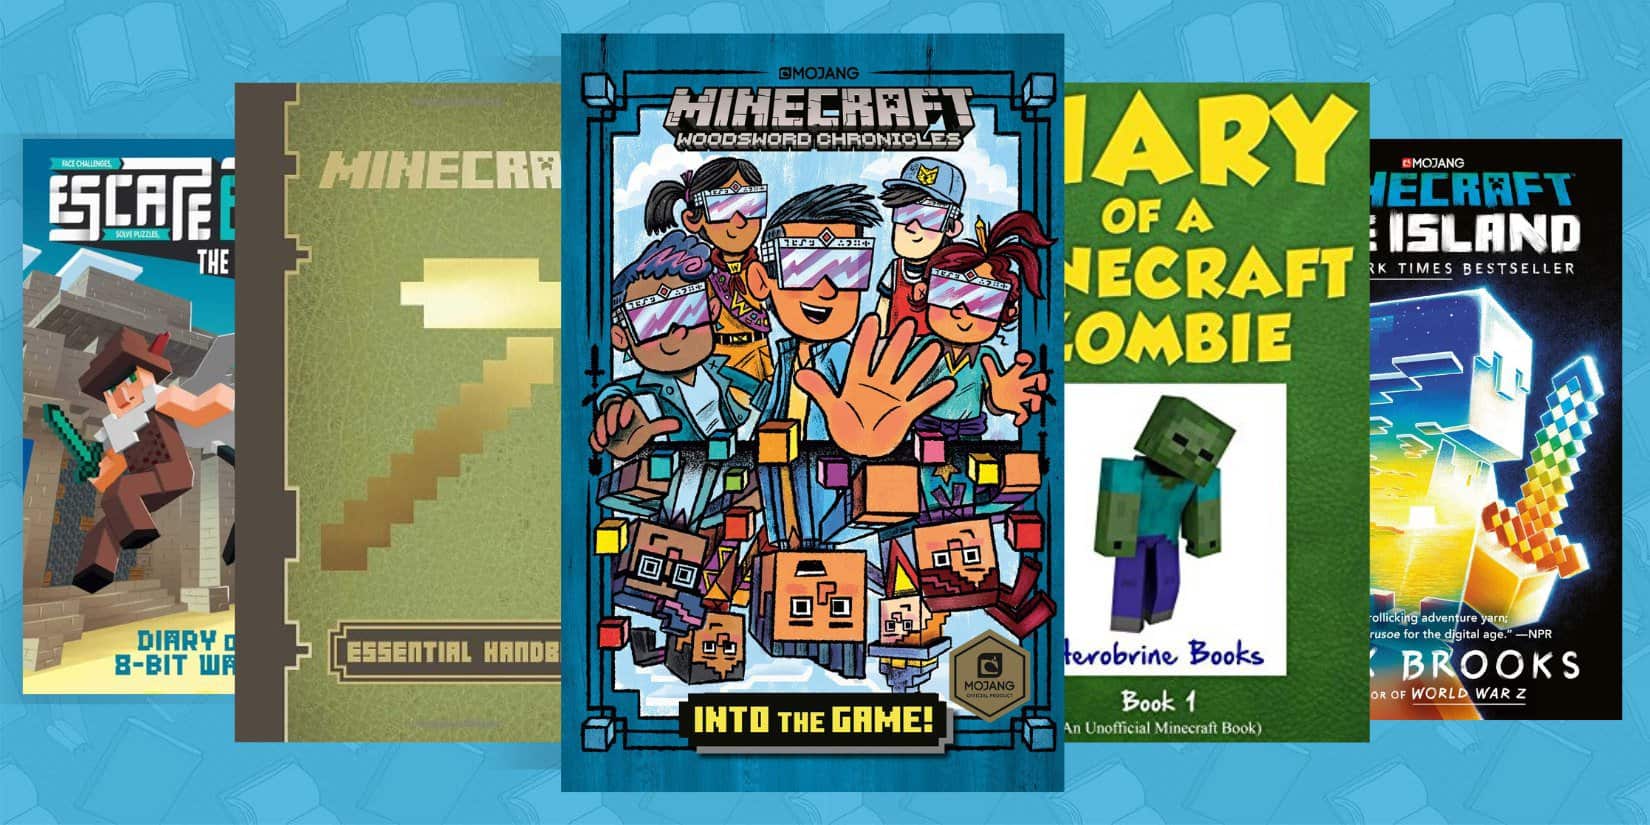 16 Excellent Minecraft Books for Kids